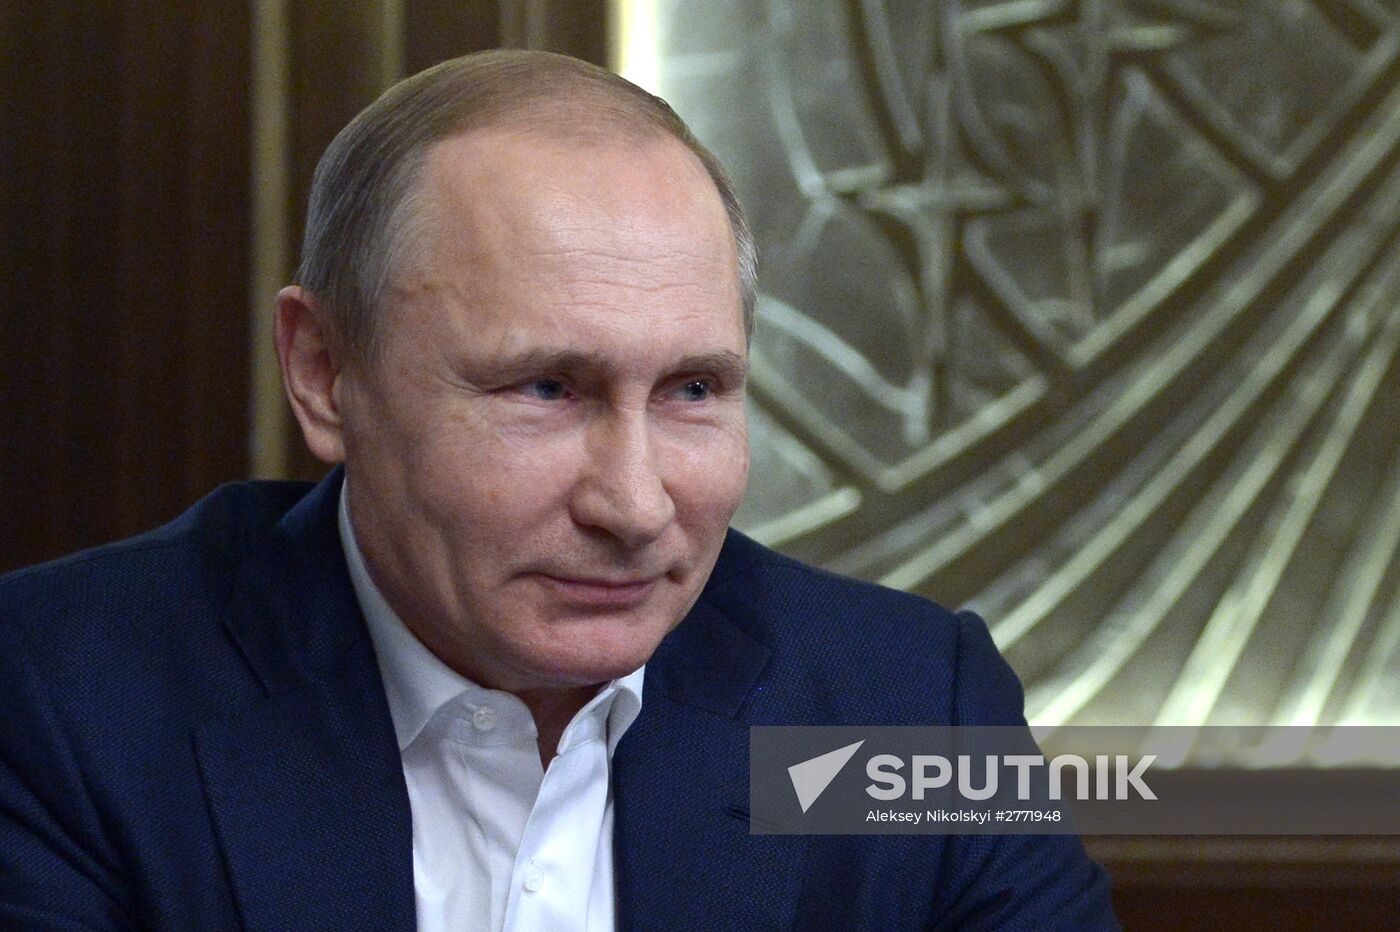 Russian President Vladimir Putin interviewed by Germany's Bild magazine